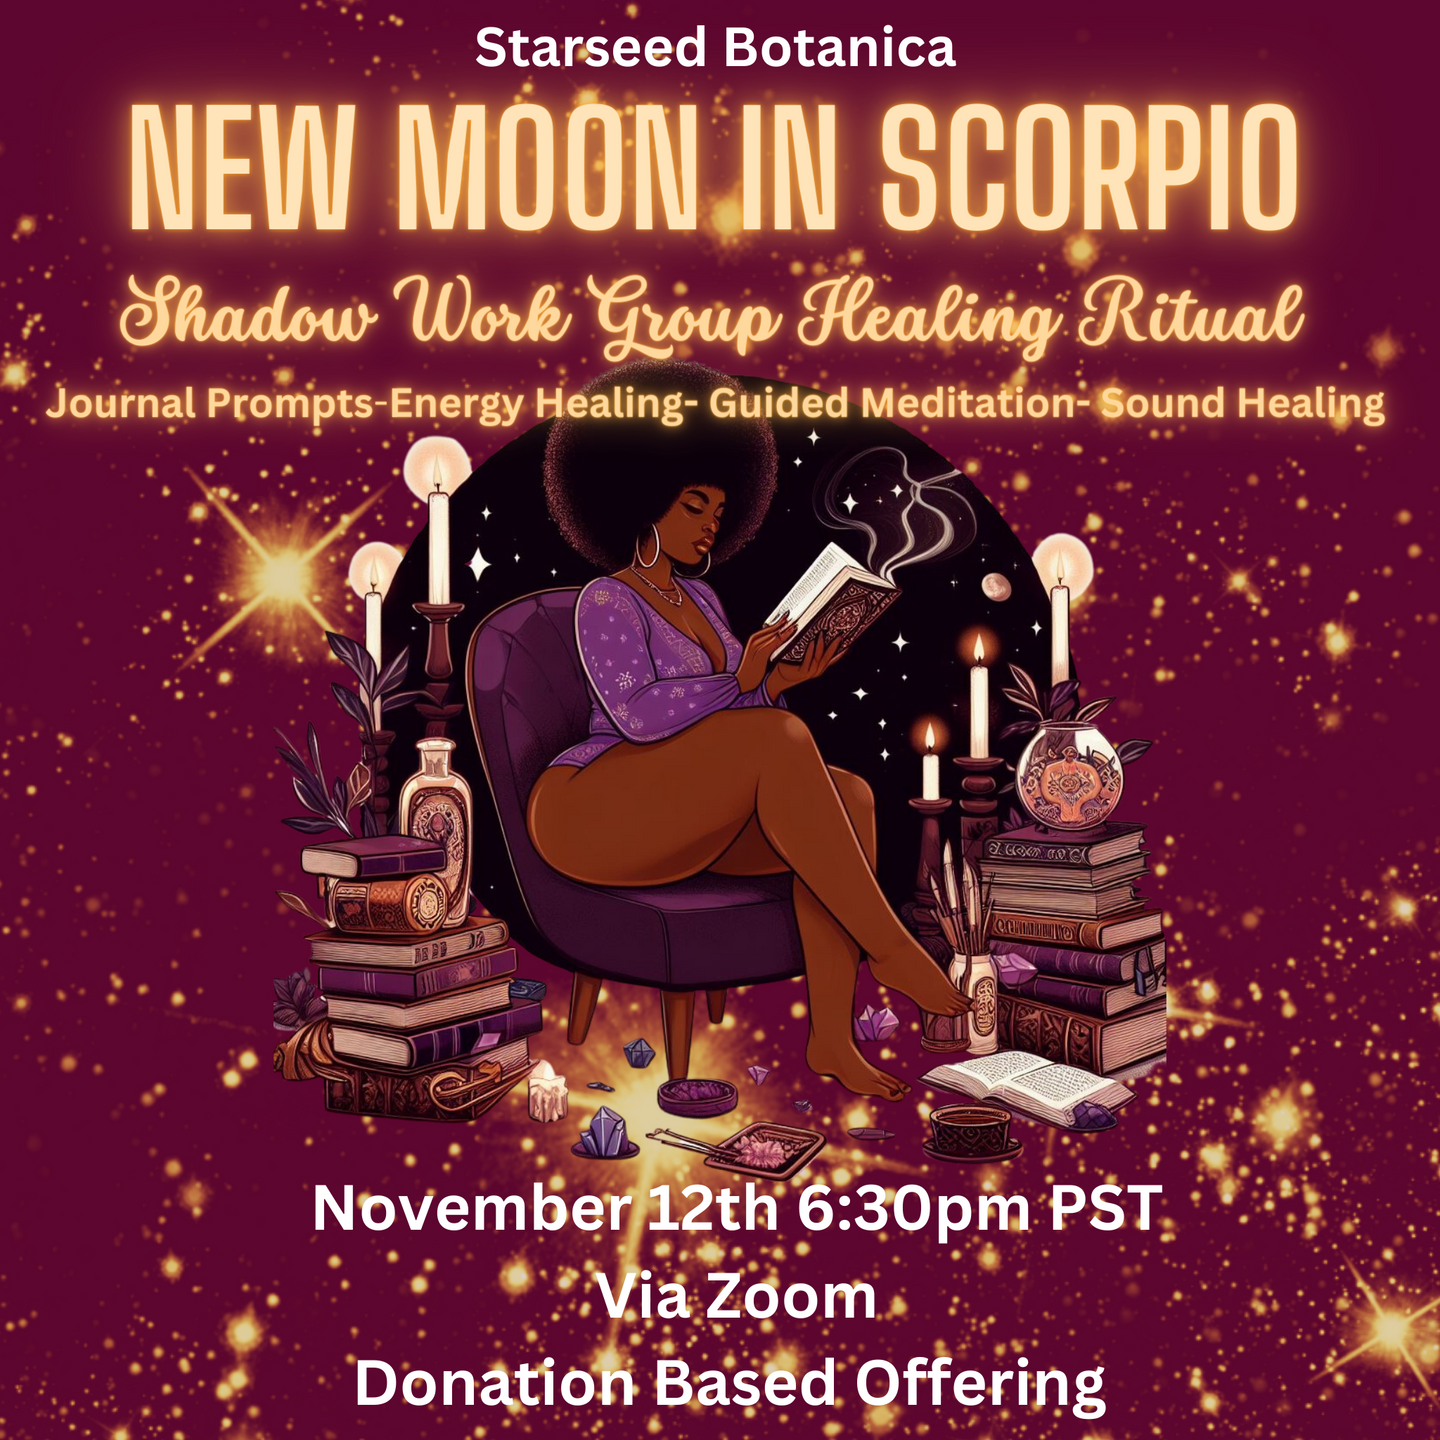 New Moon in Scorpio - Group Healing Service